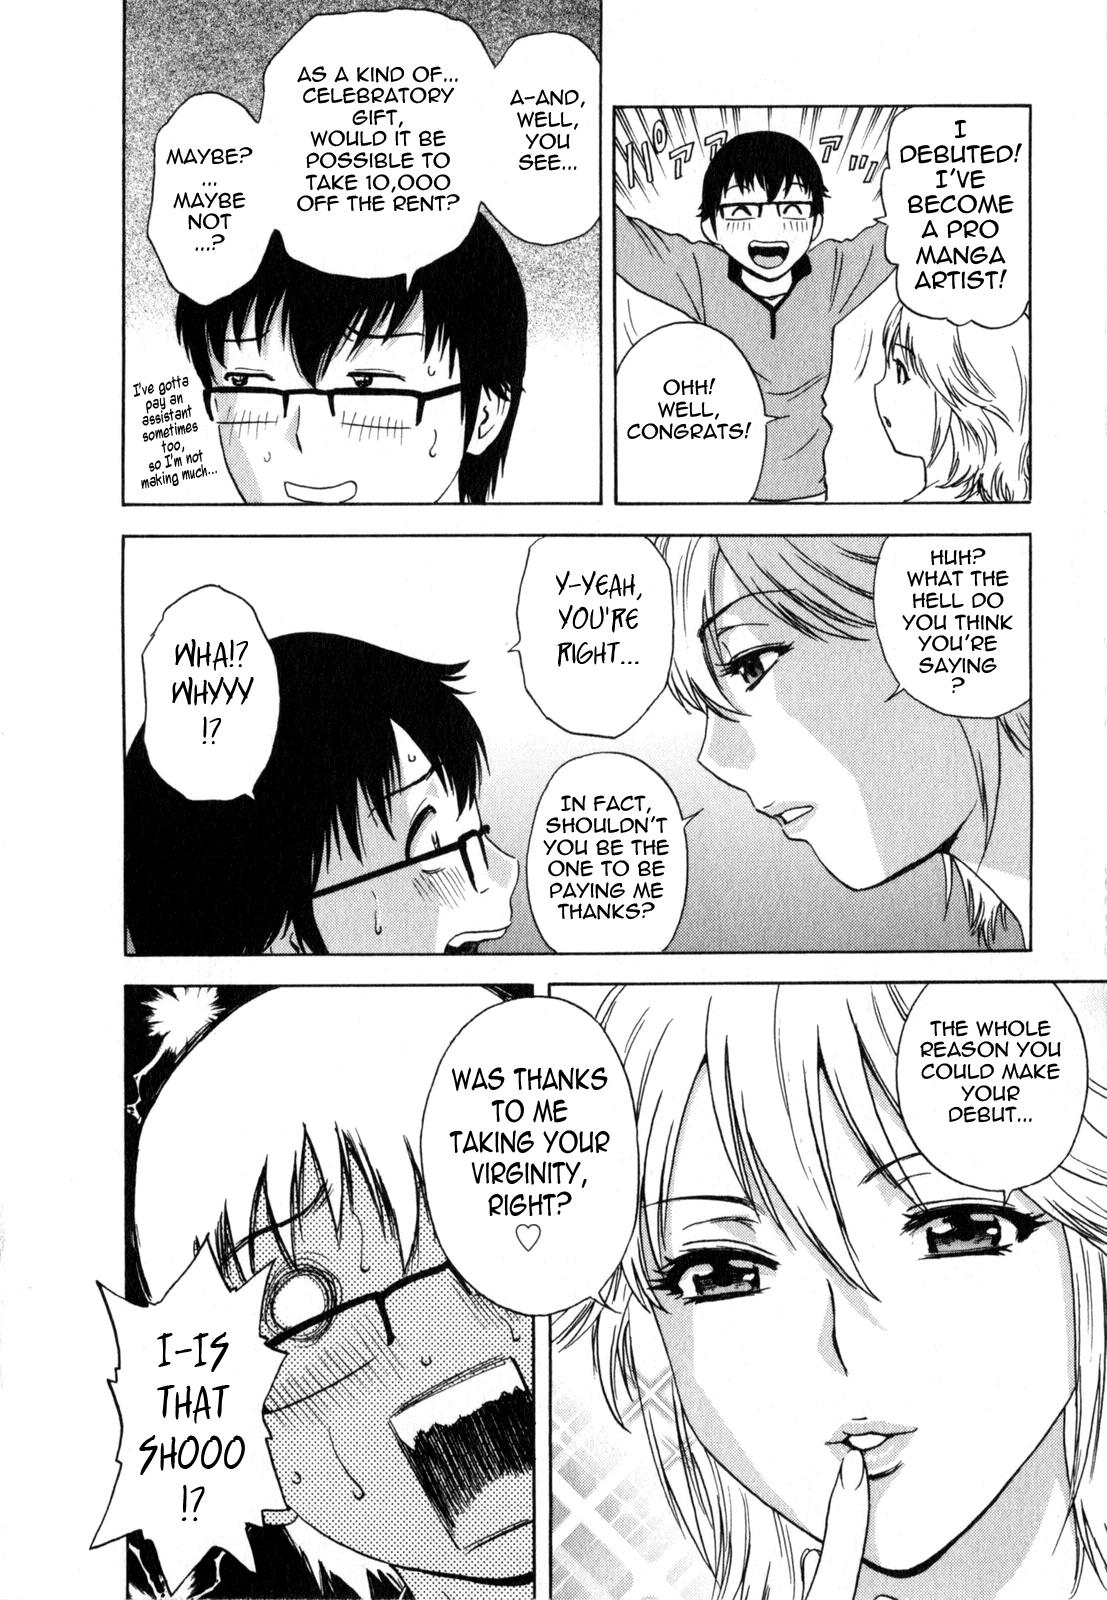 [Hidemaru] Life with Married Women Just Like a Manga 2 - Ch. 1-5 [English] {Tadanohito} 59